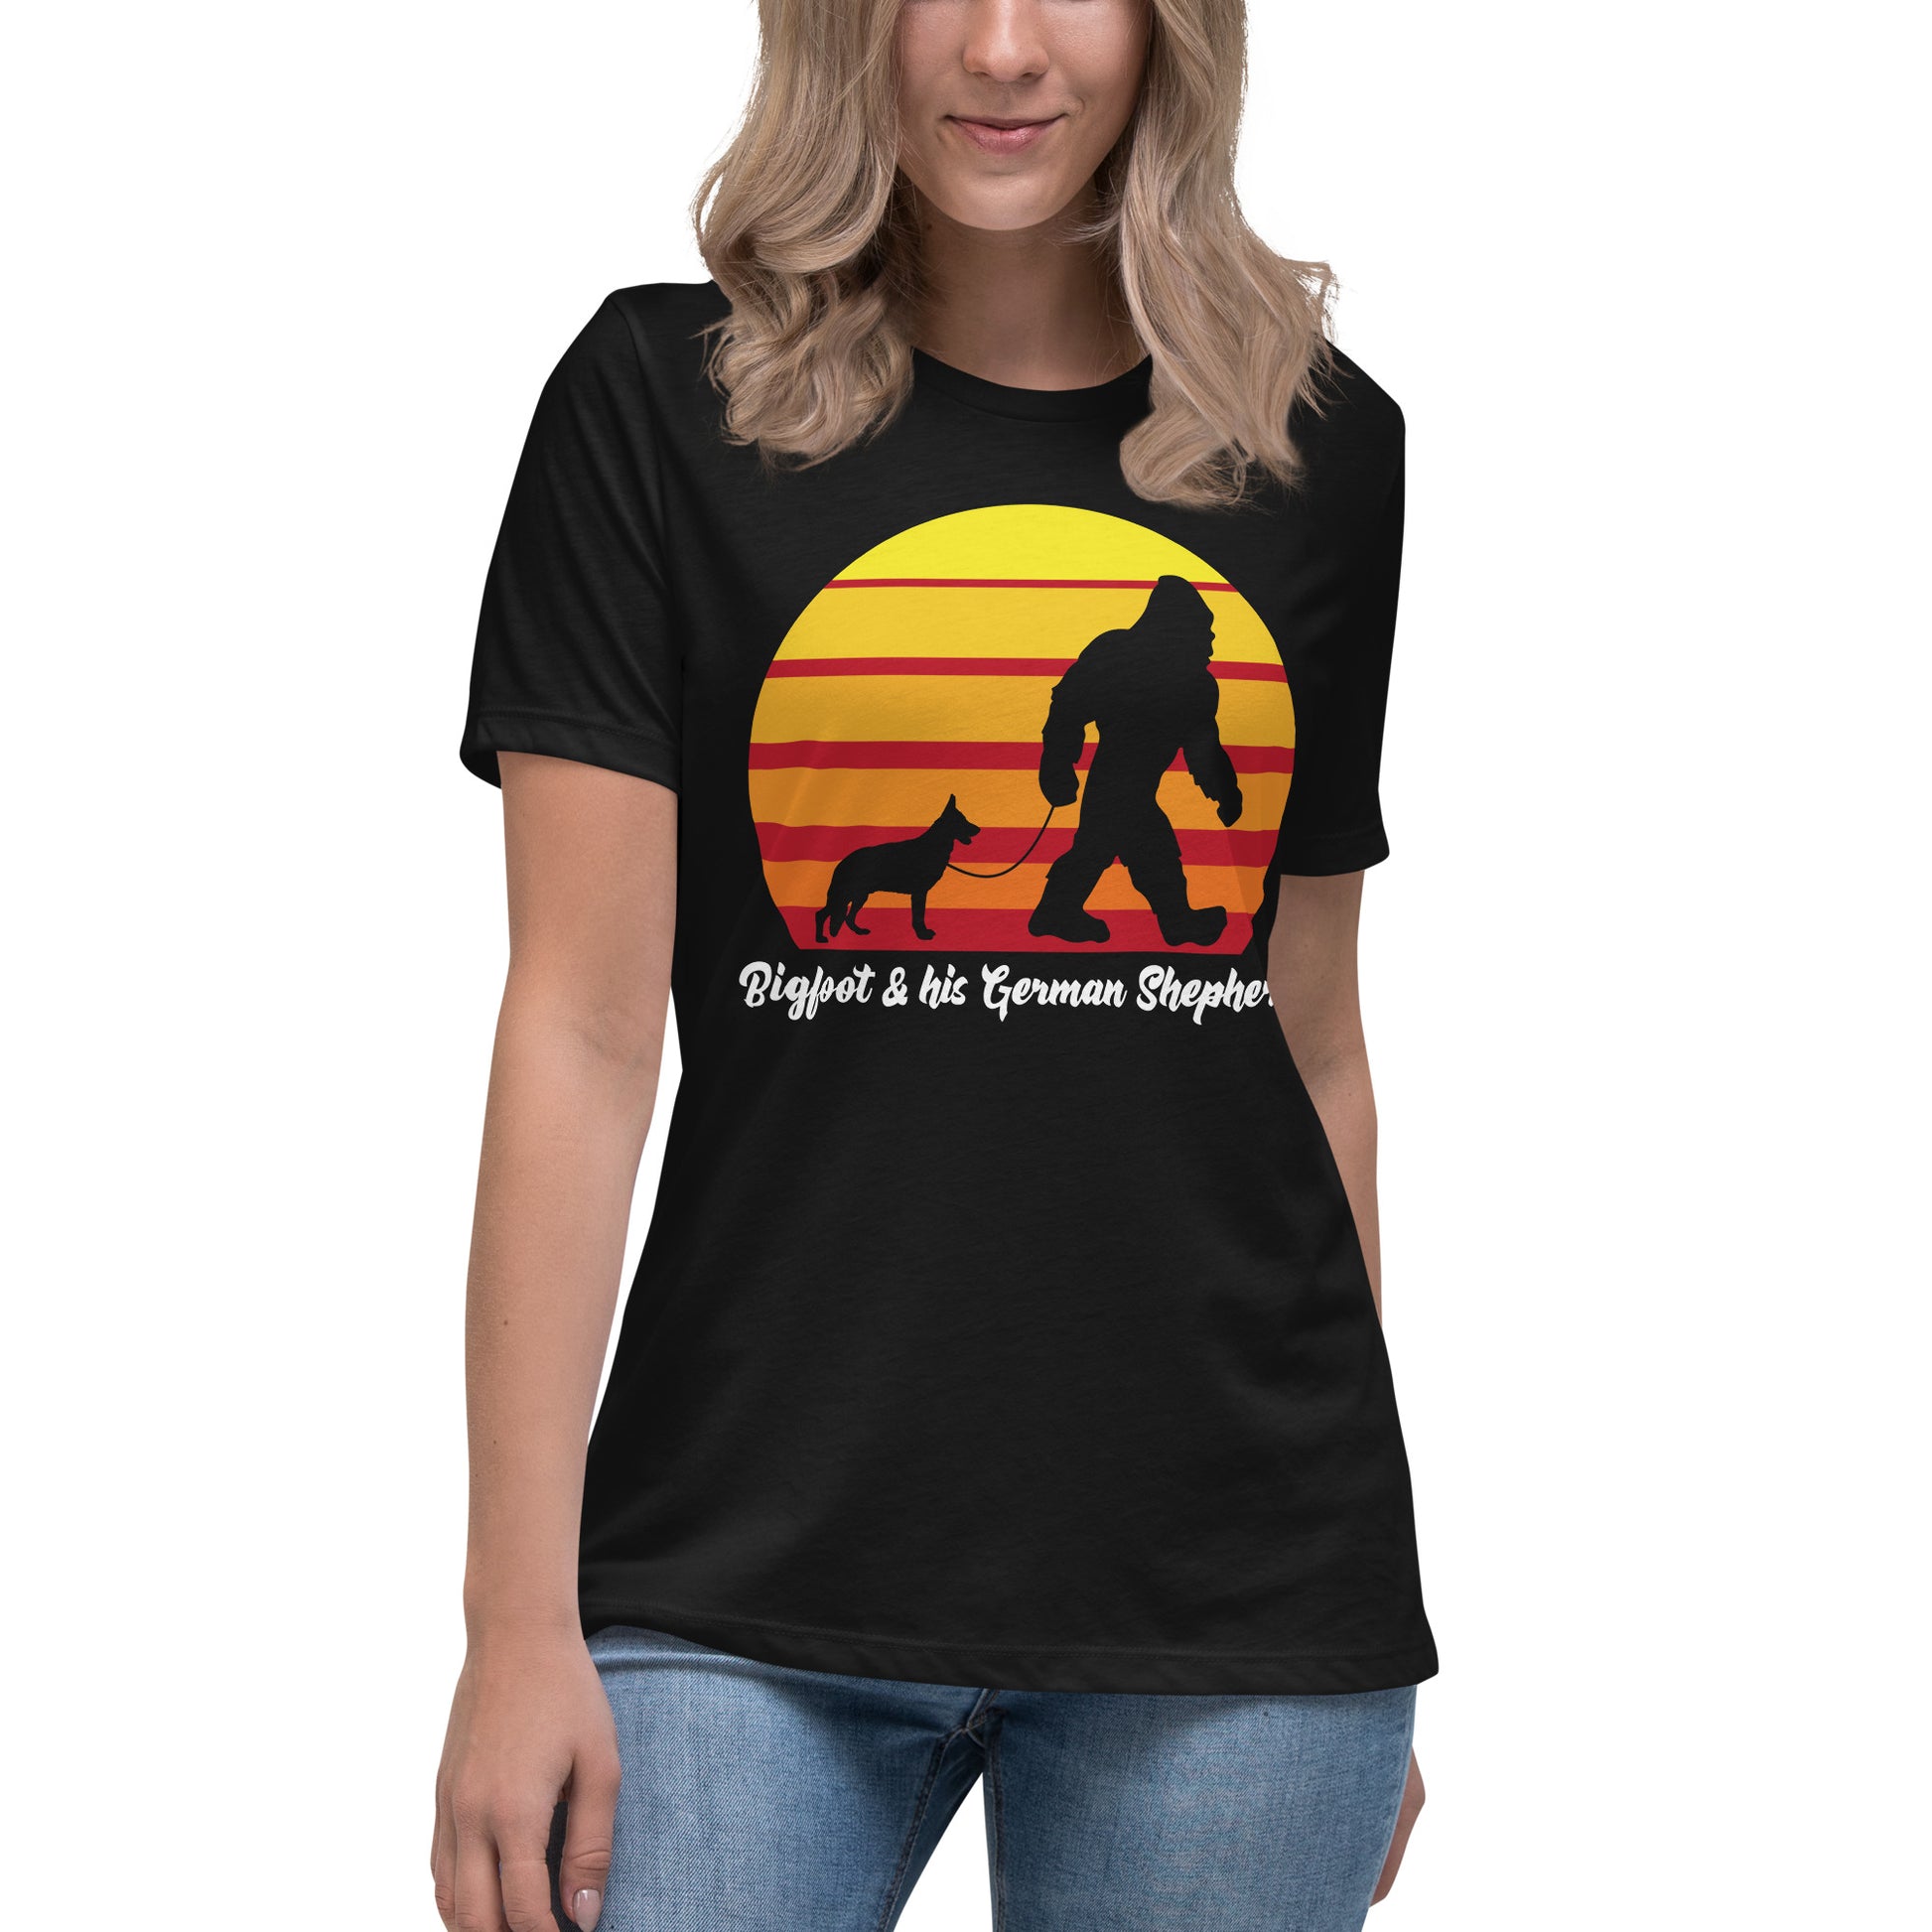 Big foot and his German Shepherd women’s black t-shirt by Dog Artistry.